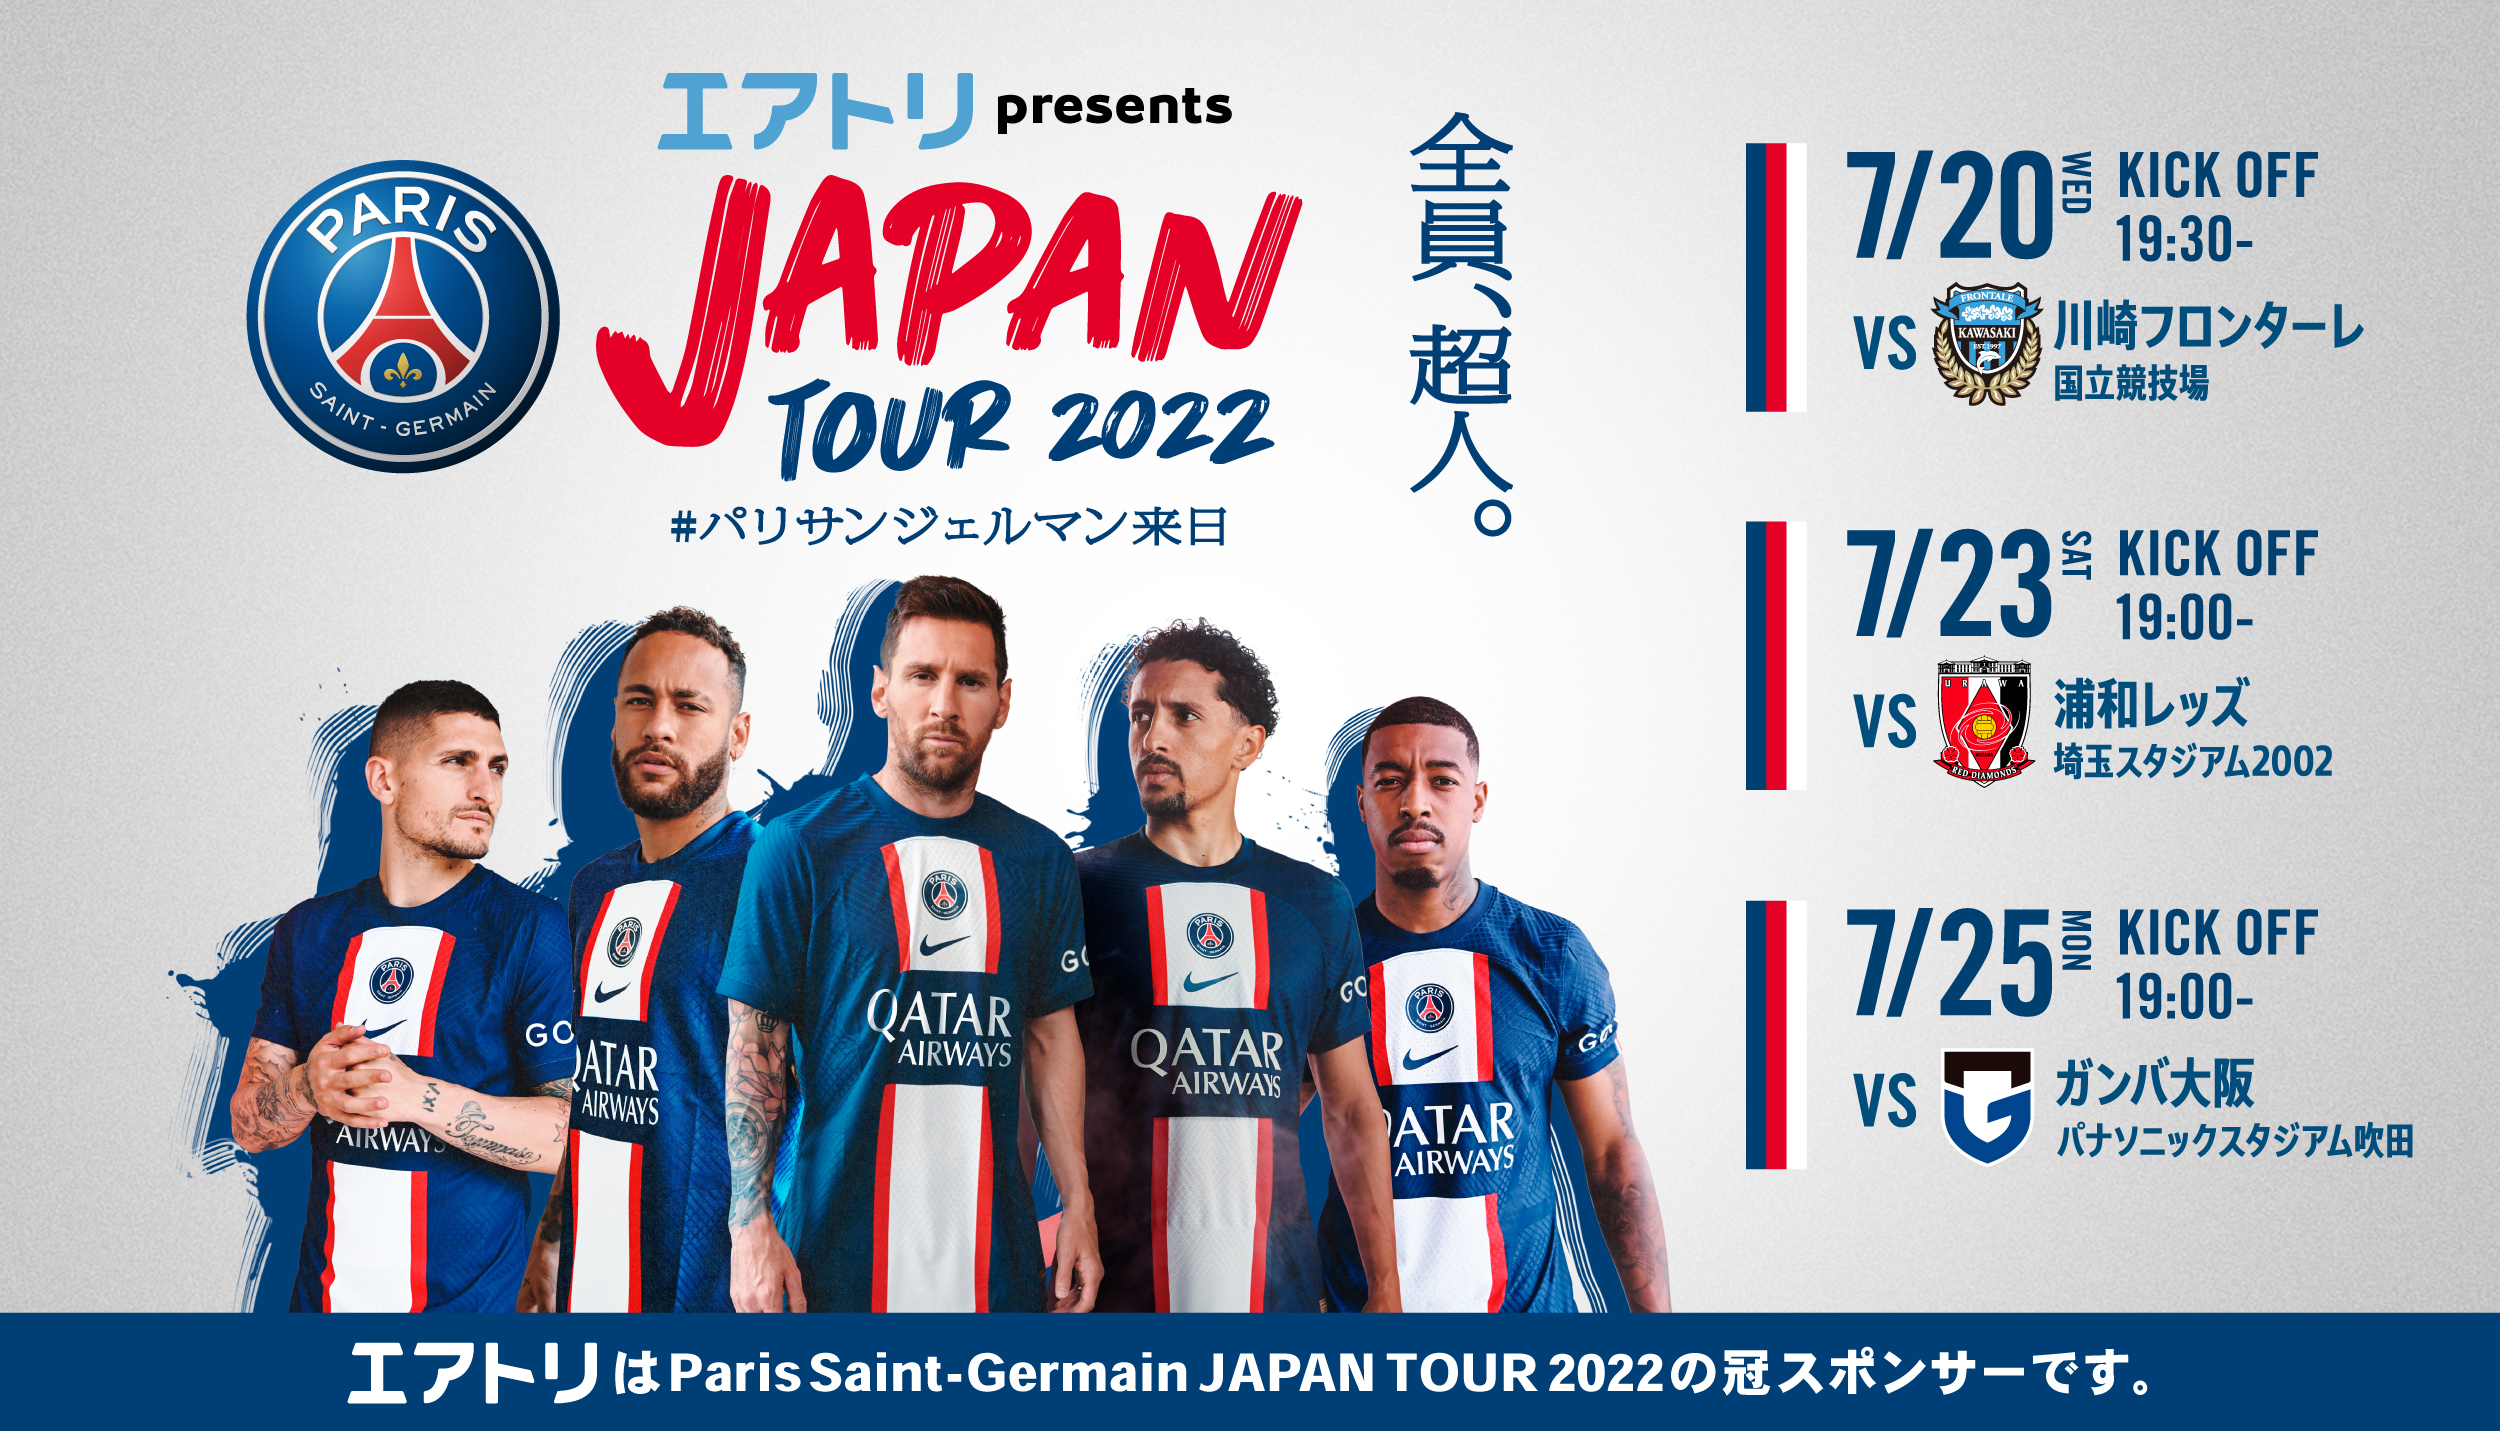 Paris Saint-Germain JAPAN TOUR 2023グッツ